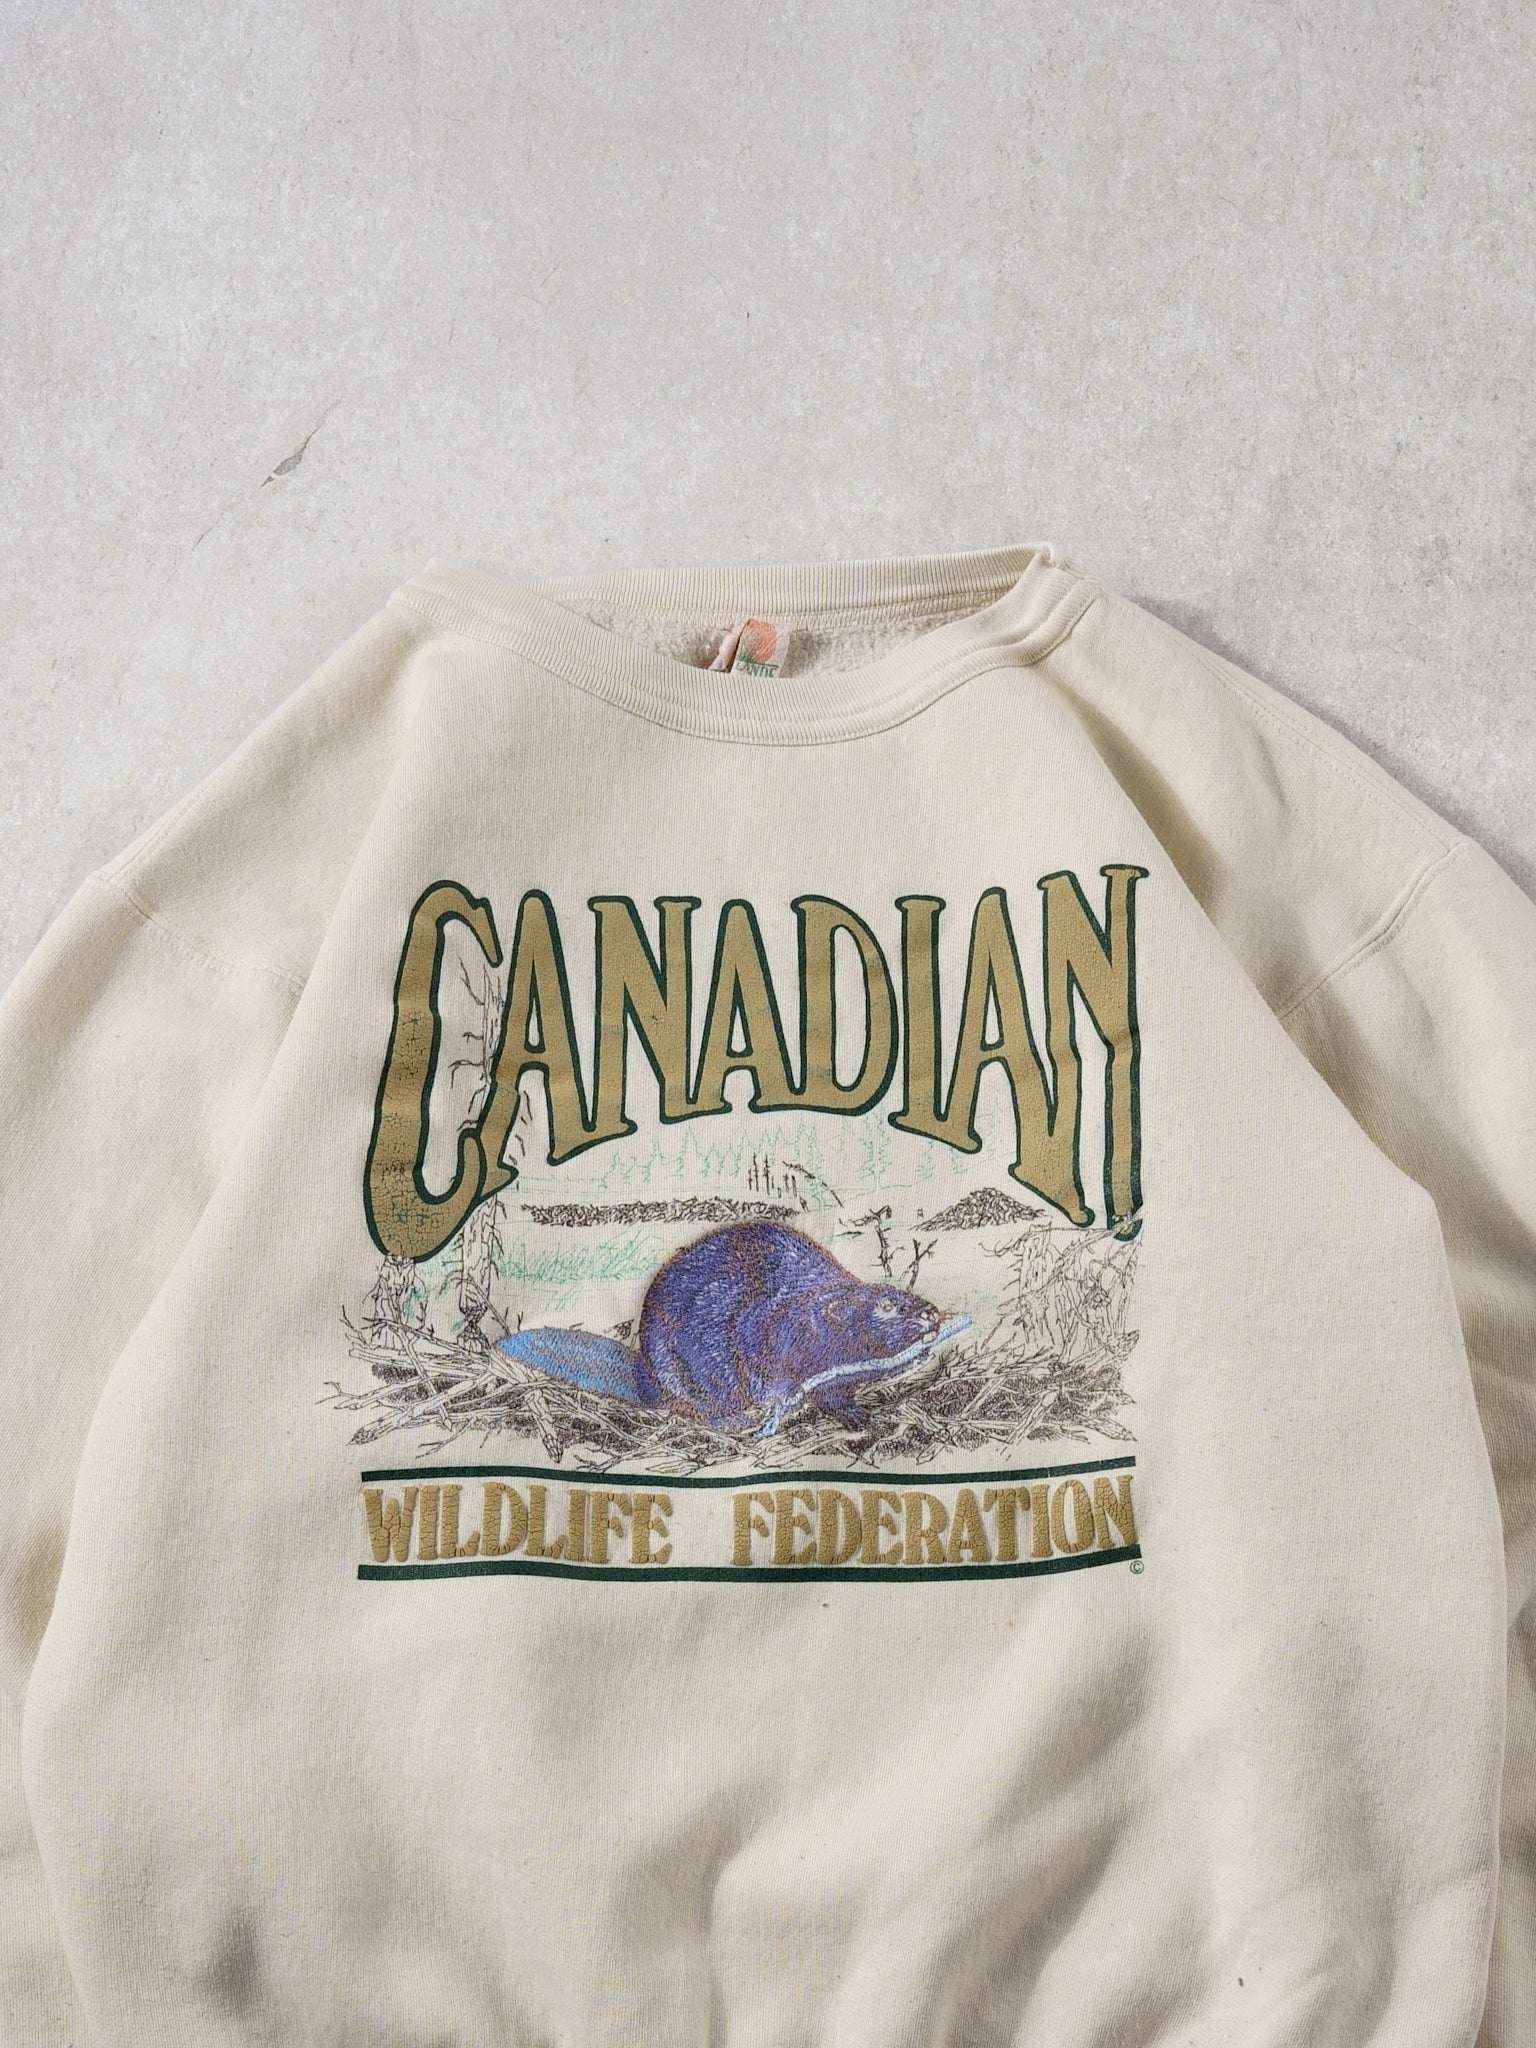 Vintage 90s Beige Canadian Marshland Crewneck (M)